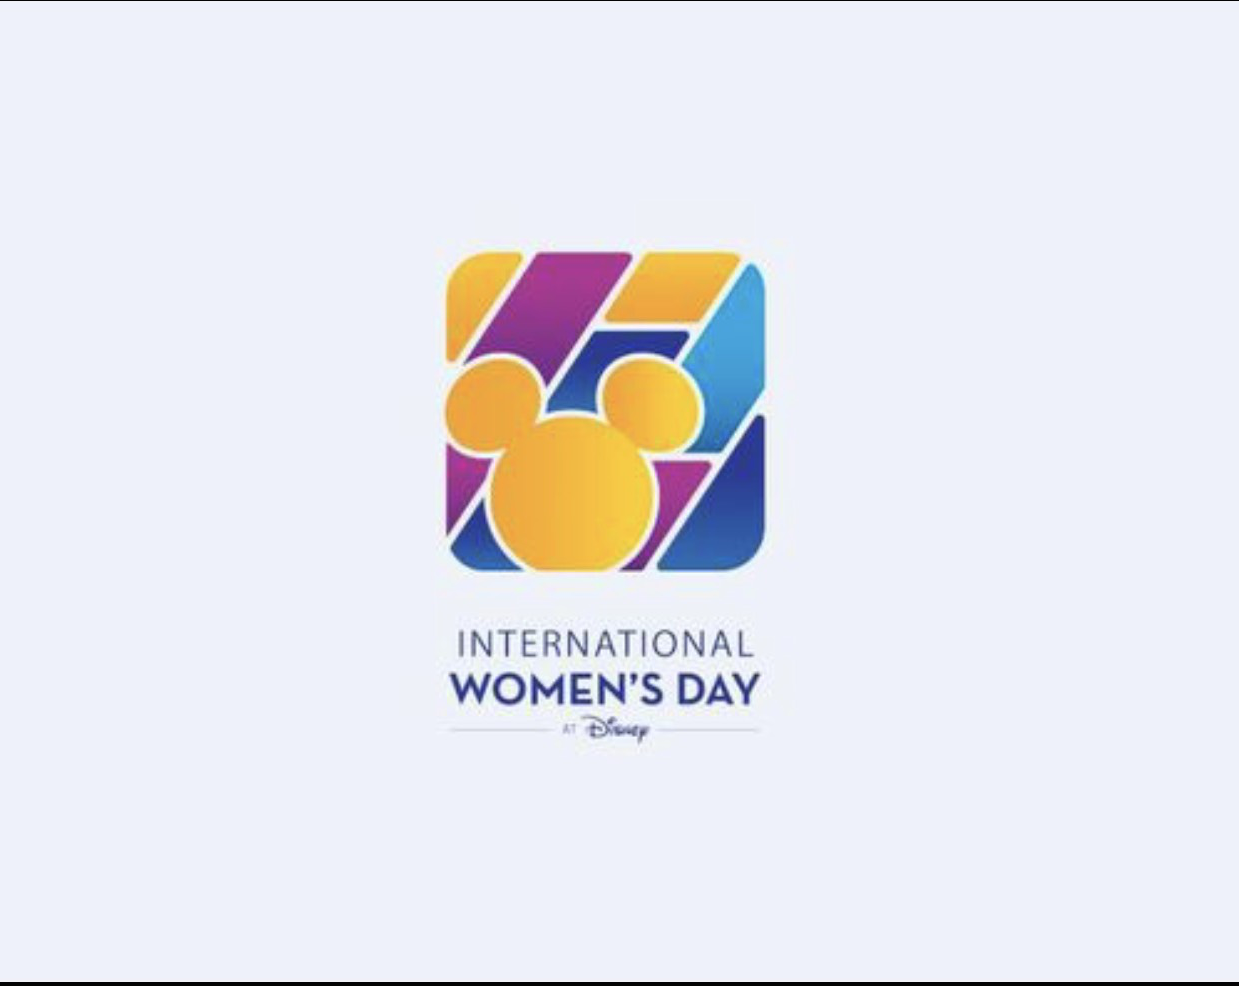 International Women’s Day at Disneyland Paris